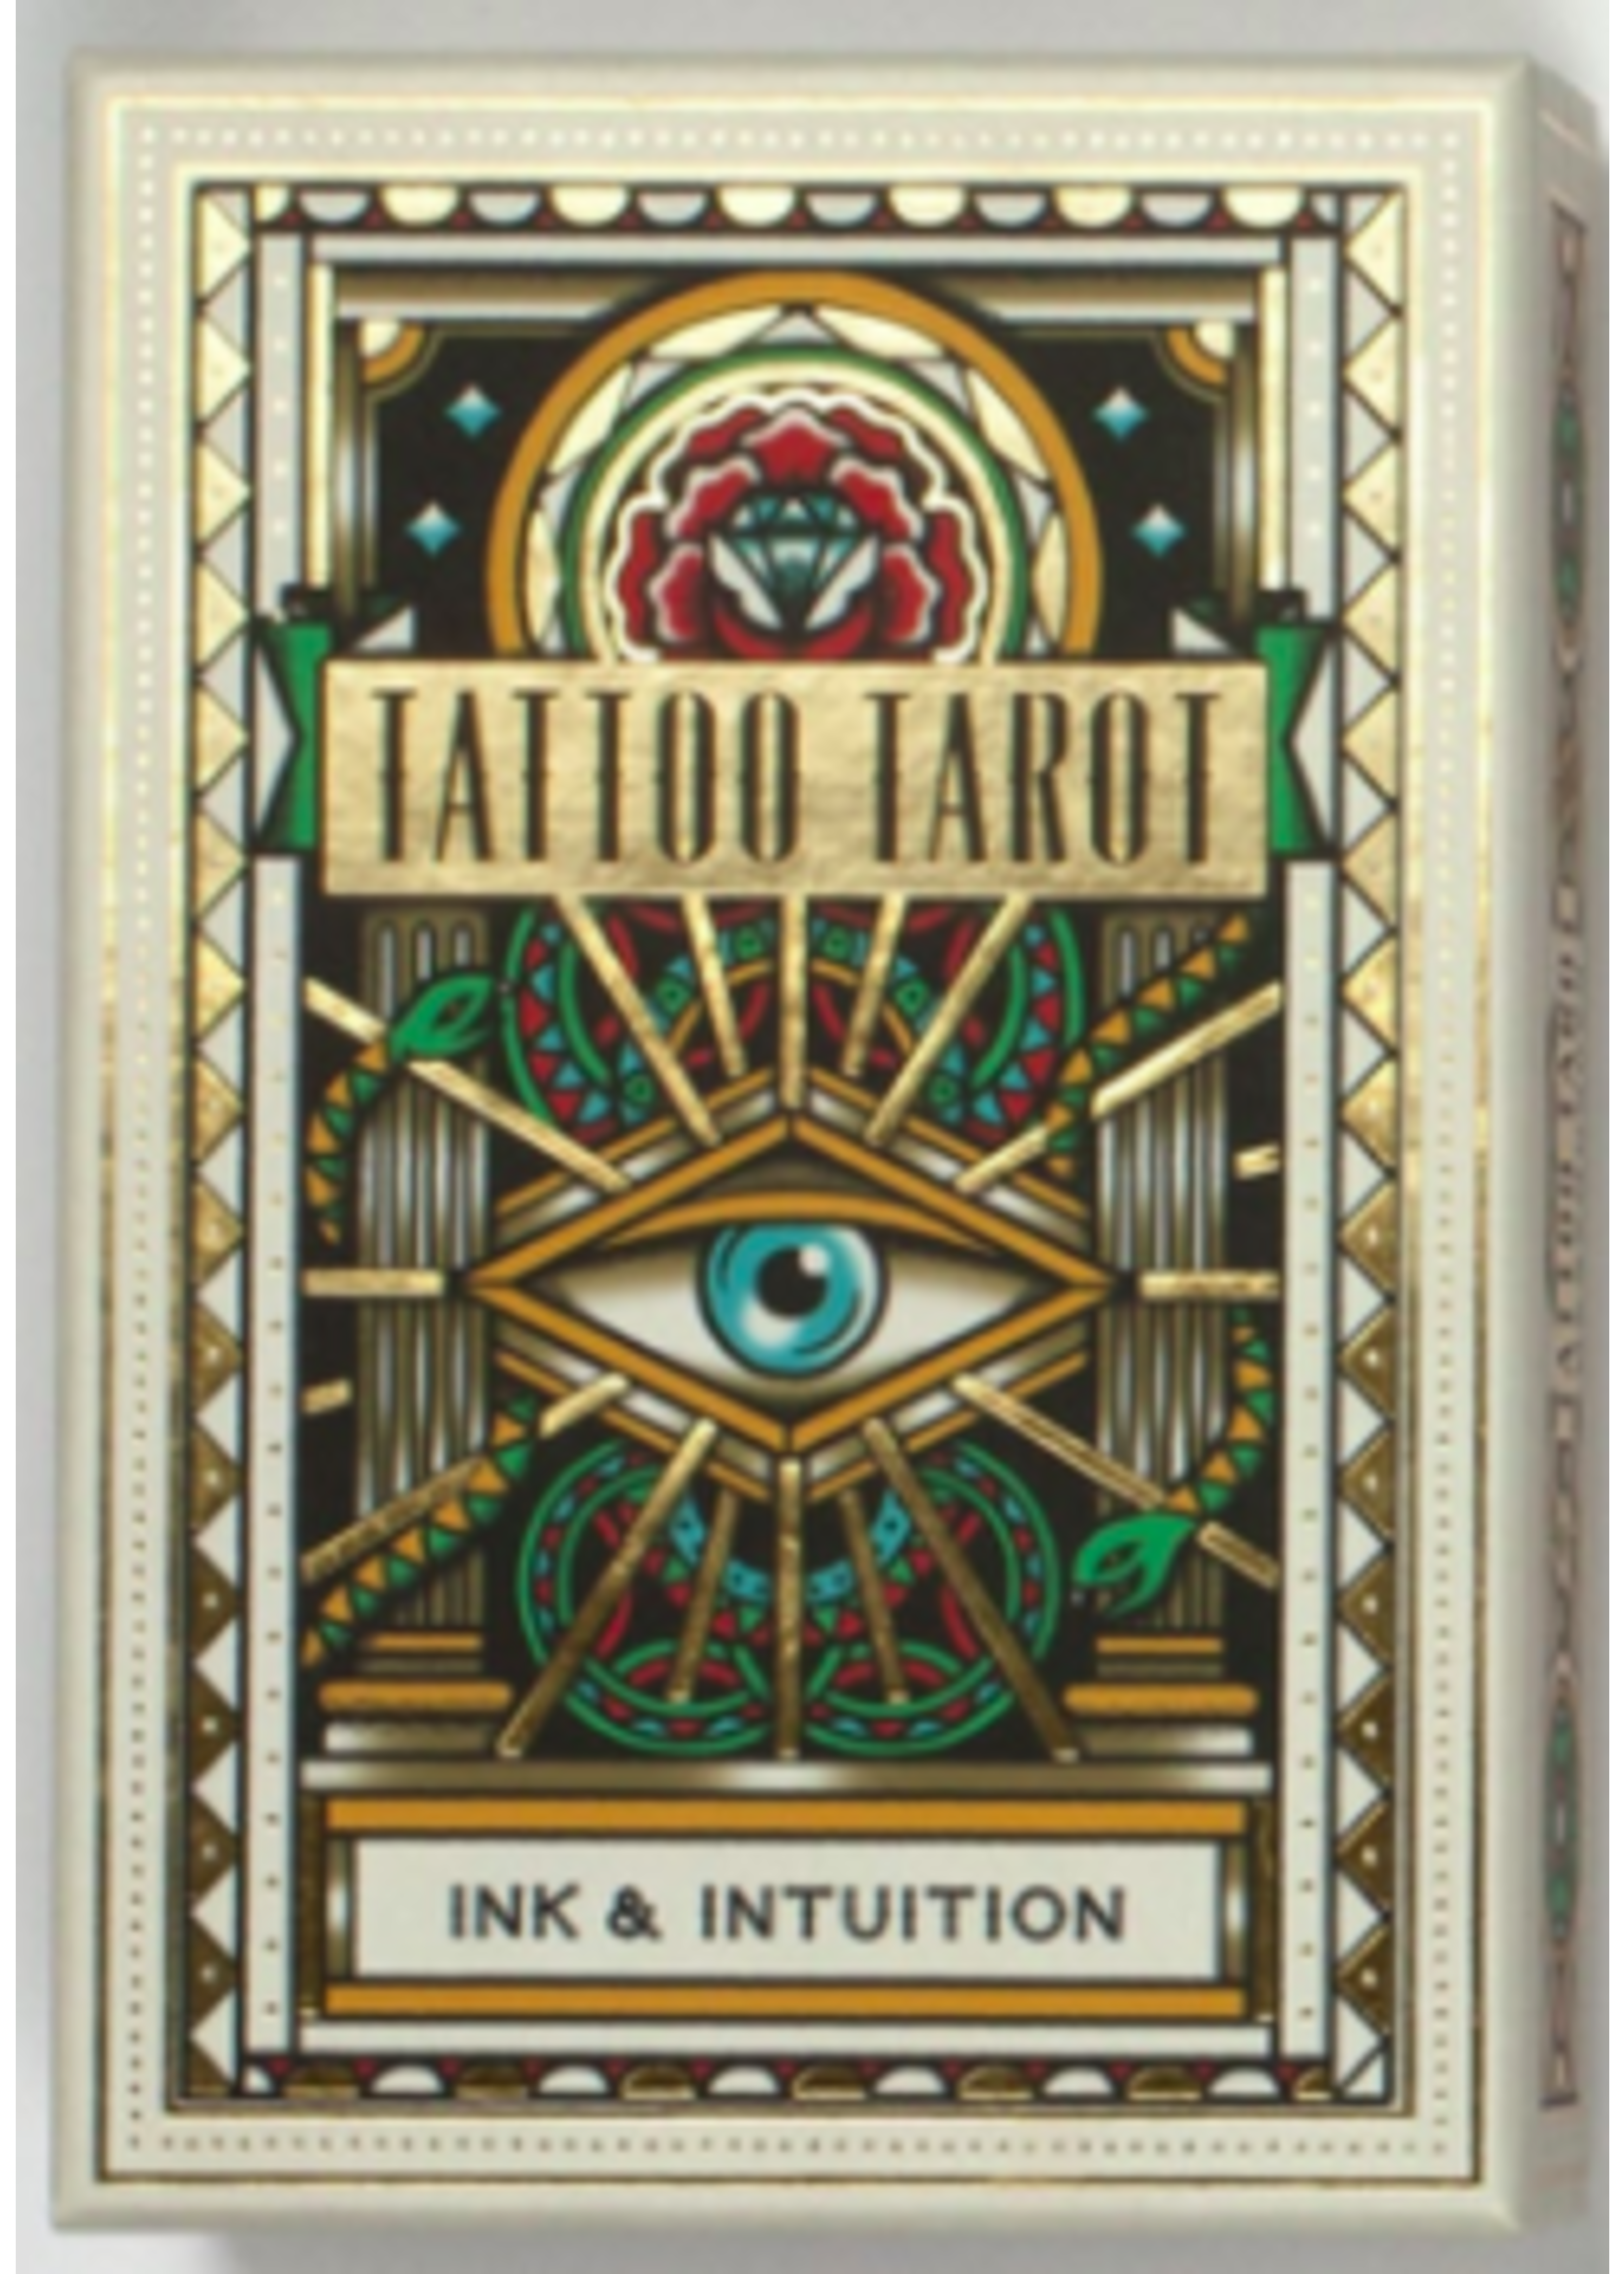 Laurence King Tattoo Tarot